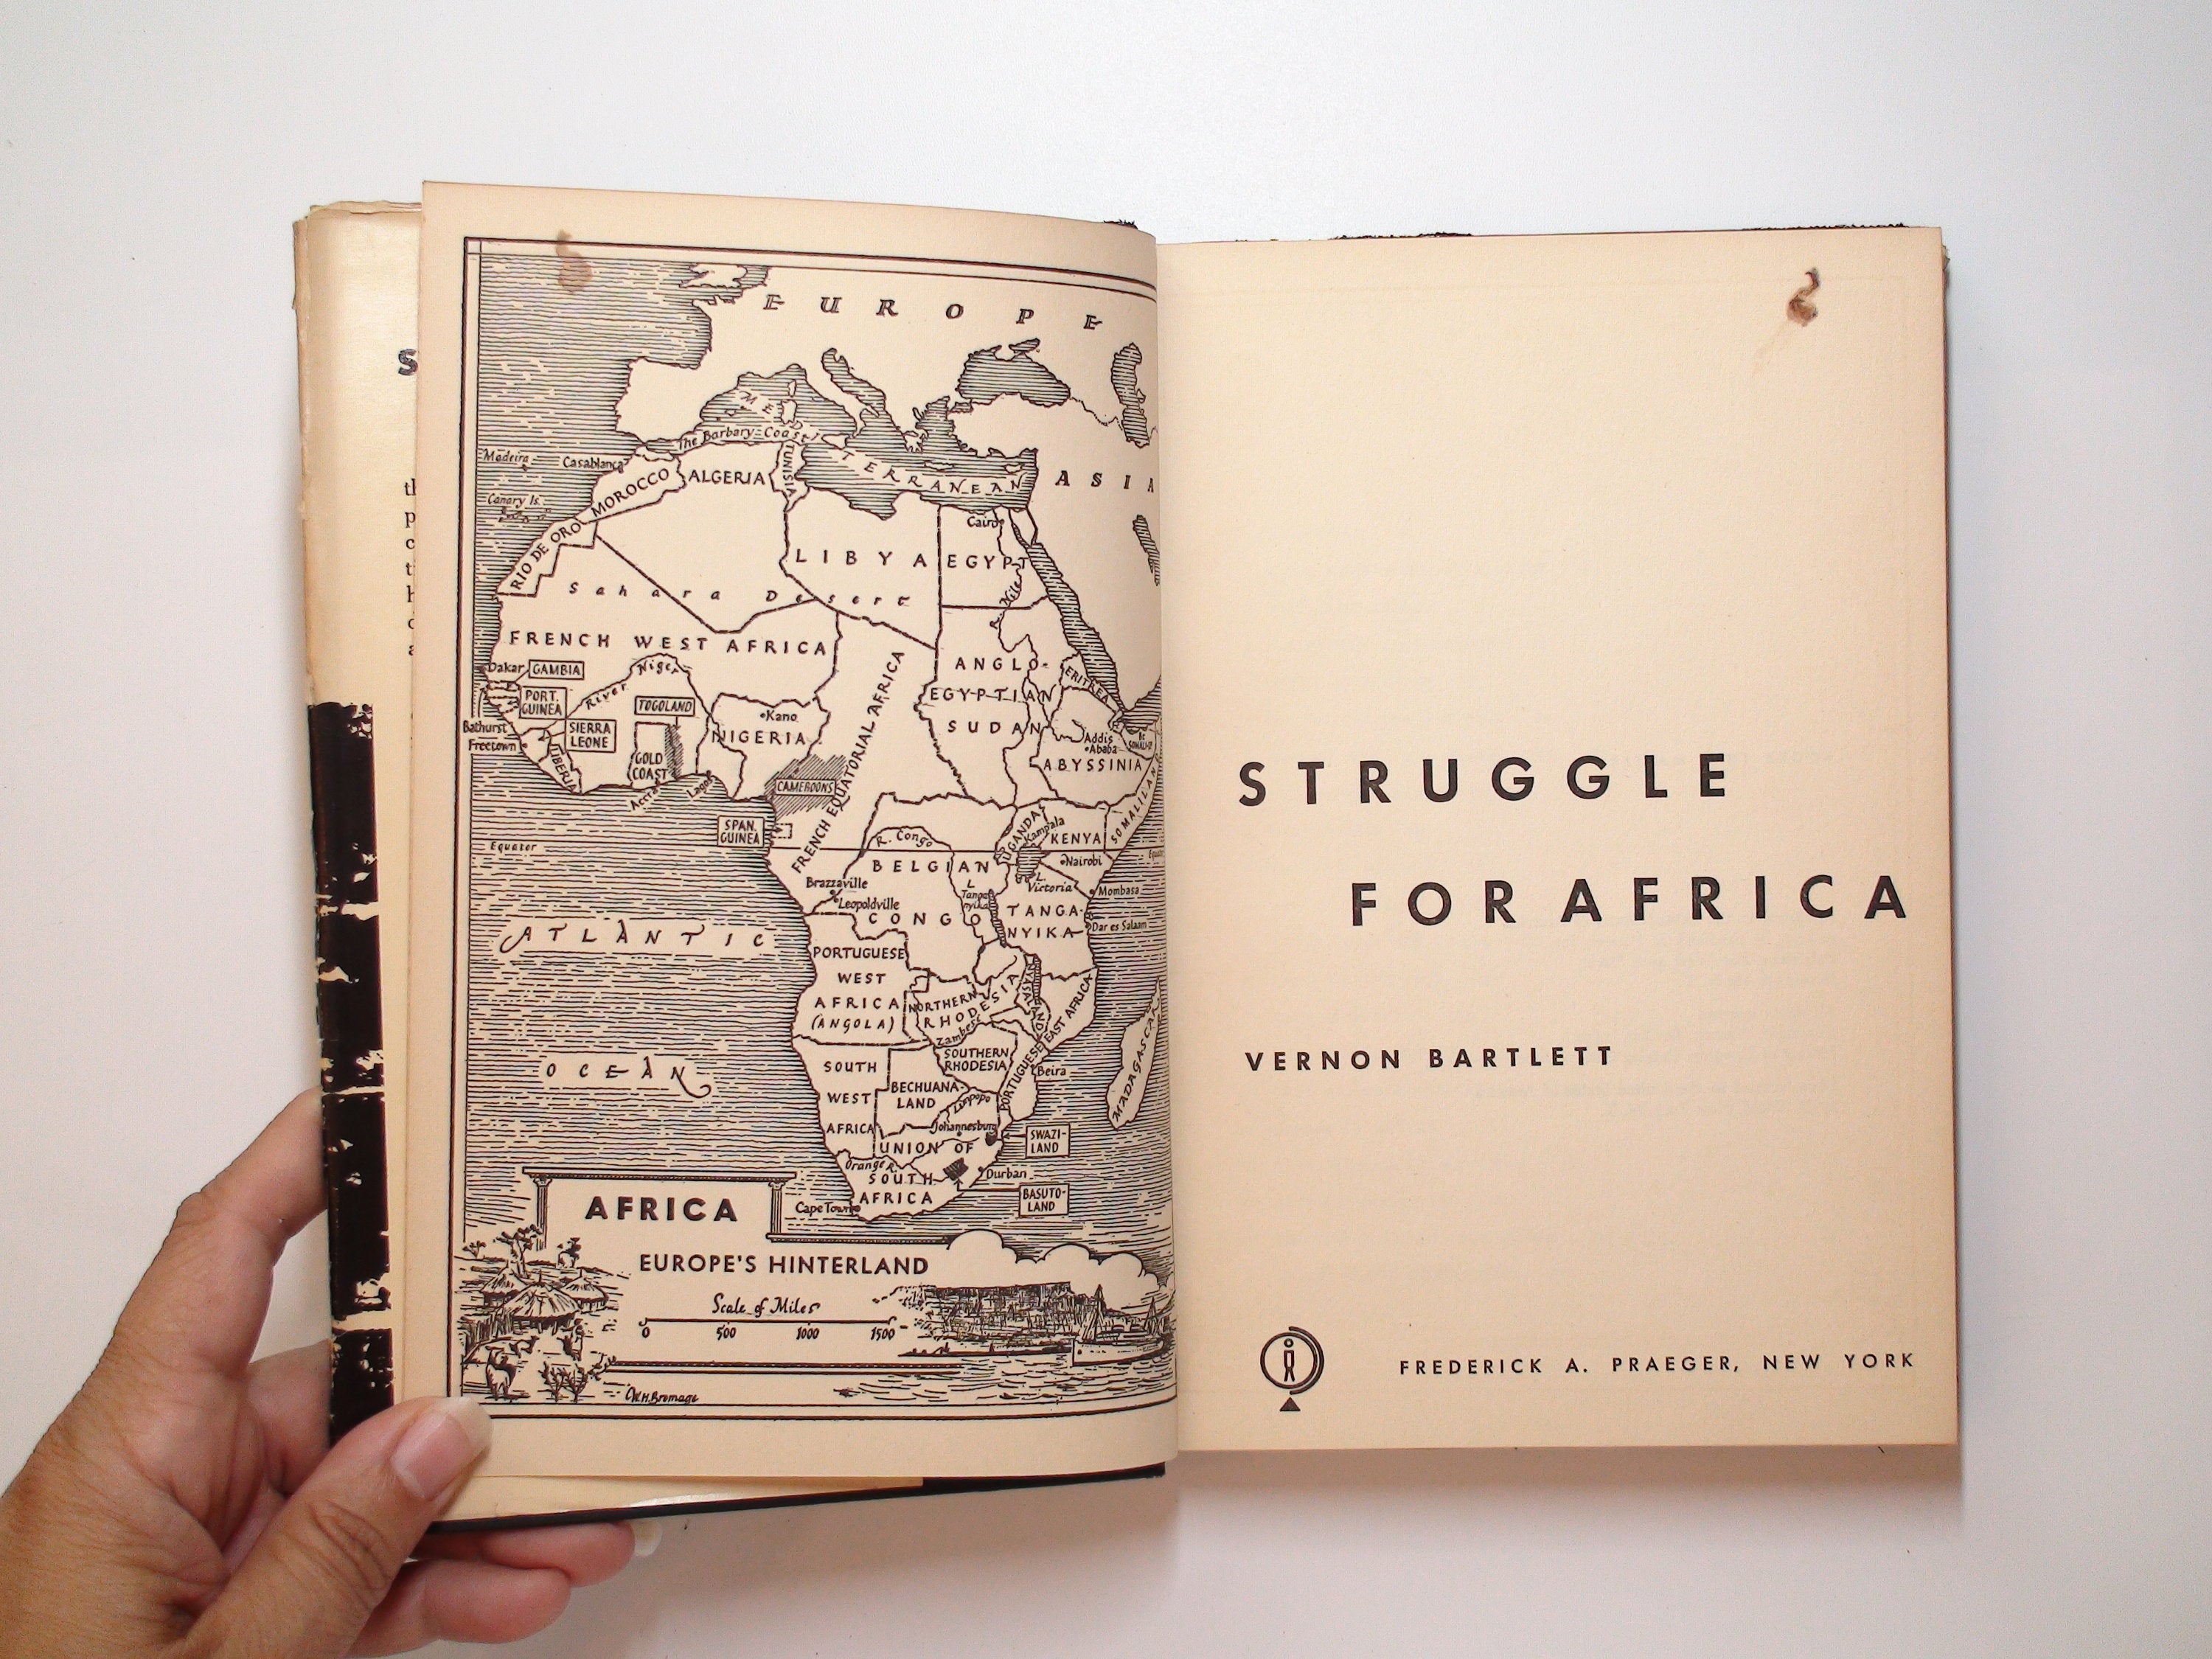 Struggle for Africa by Vernon Bartlett, Frederick A. Praeger, 1st Ed., 1953